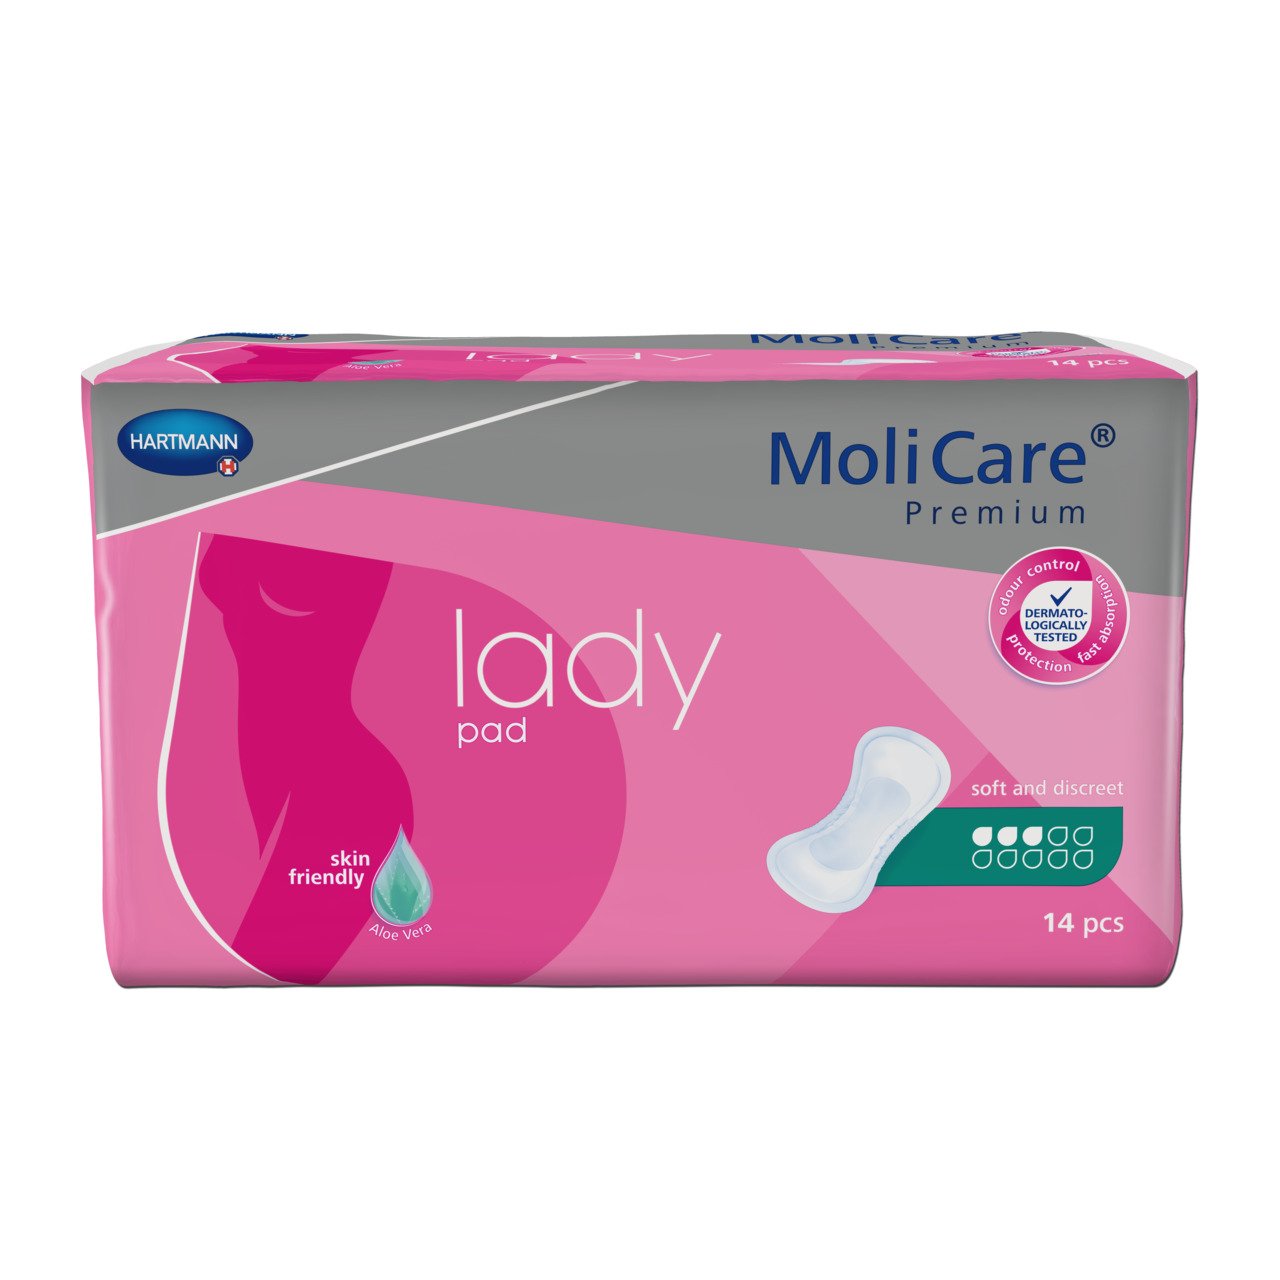 MoliCare Premium Lady Pad 3 drops 168